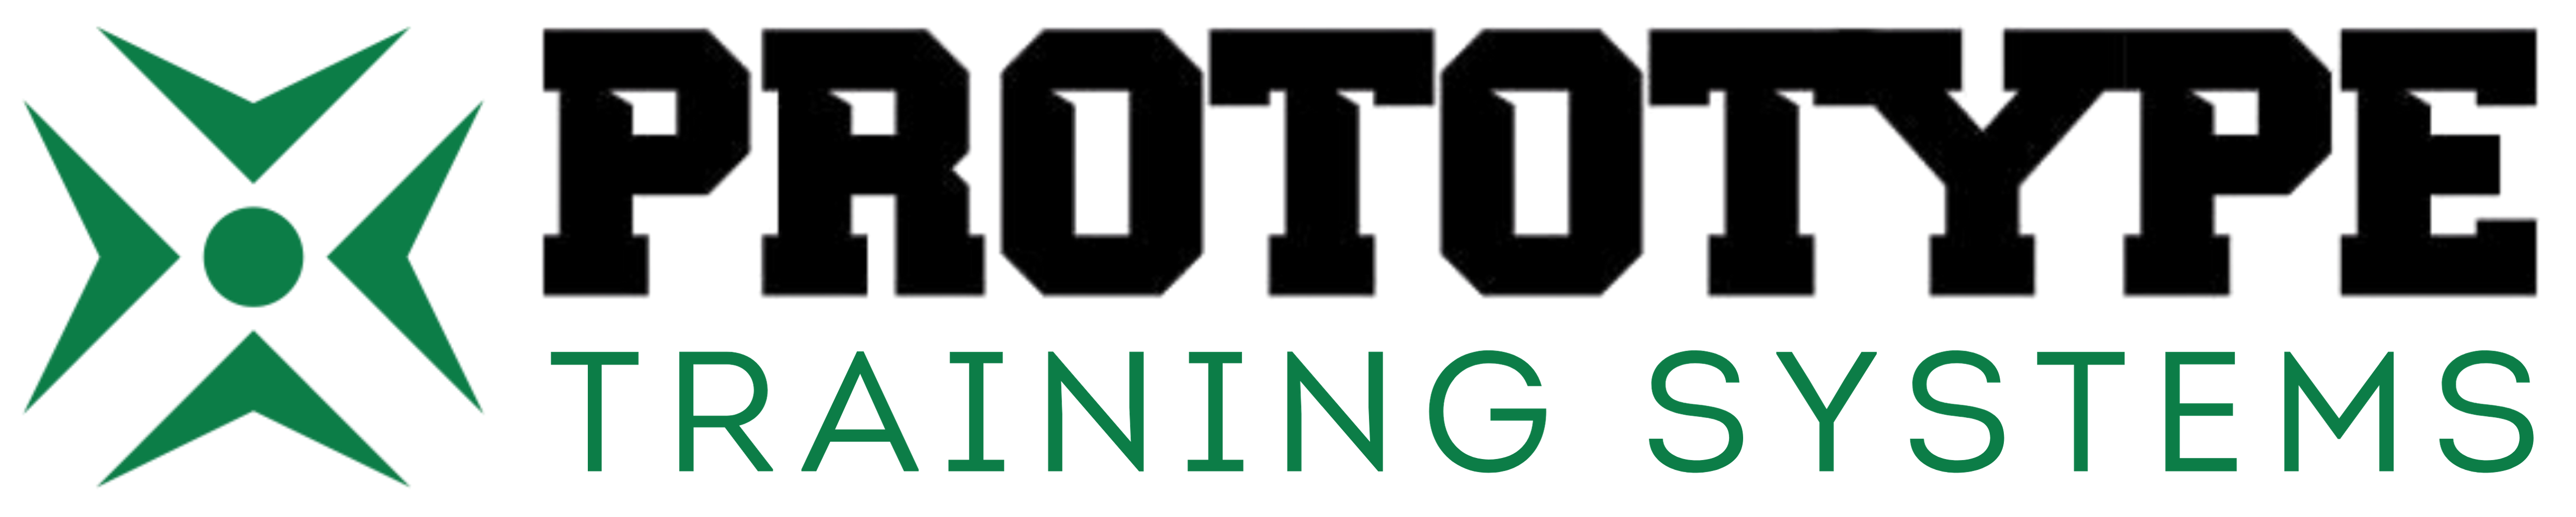 Prototype Training Systems logo